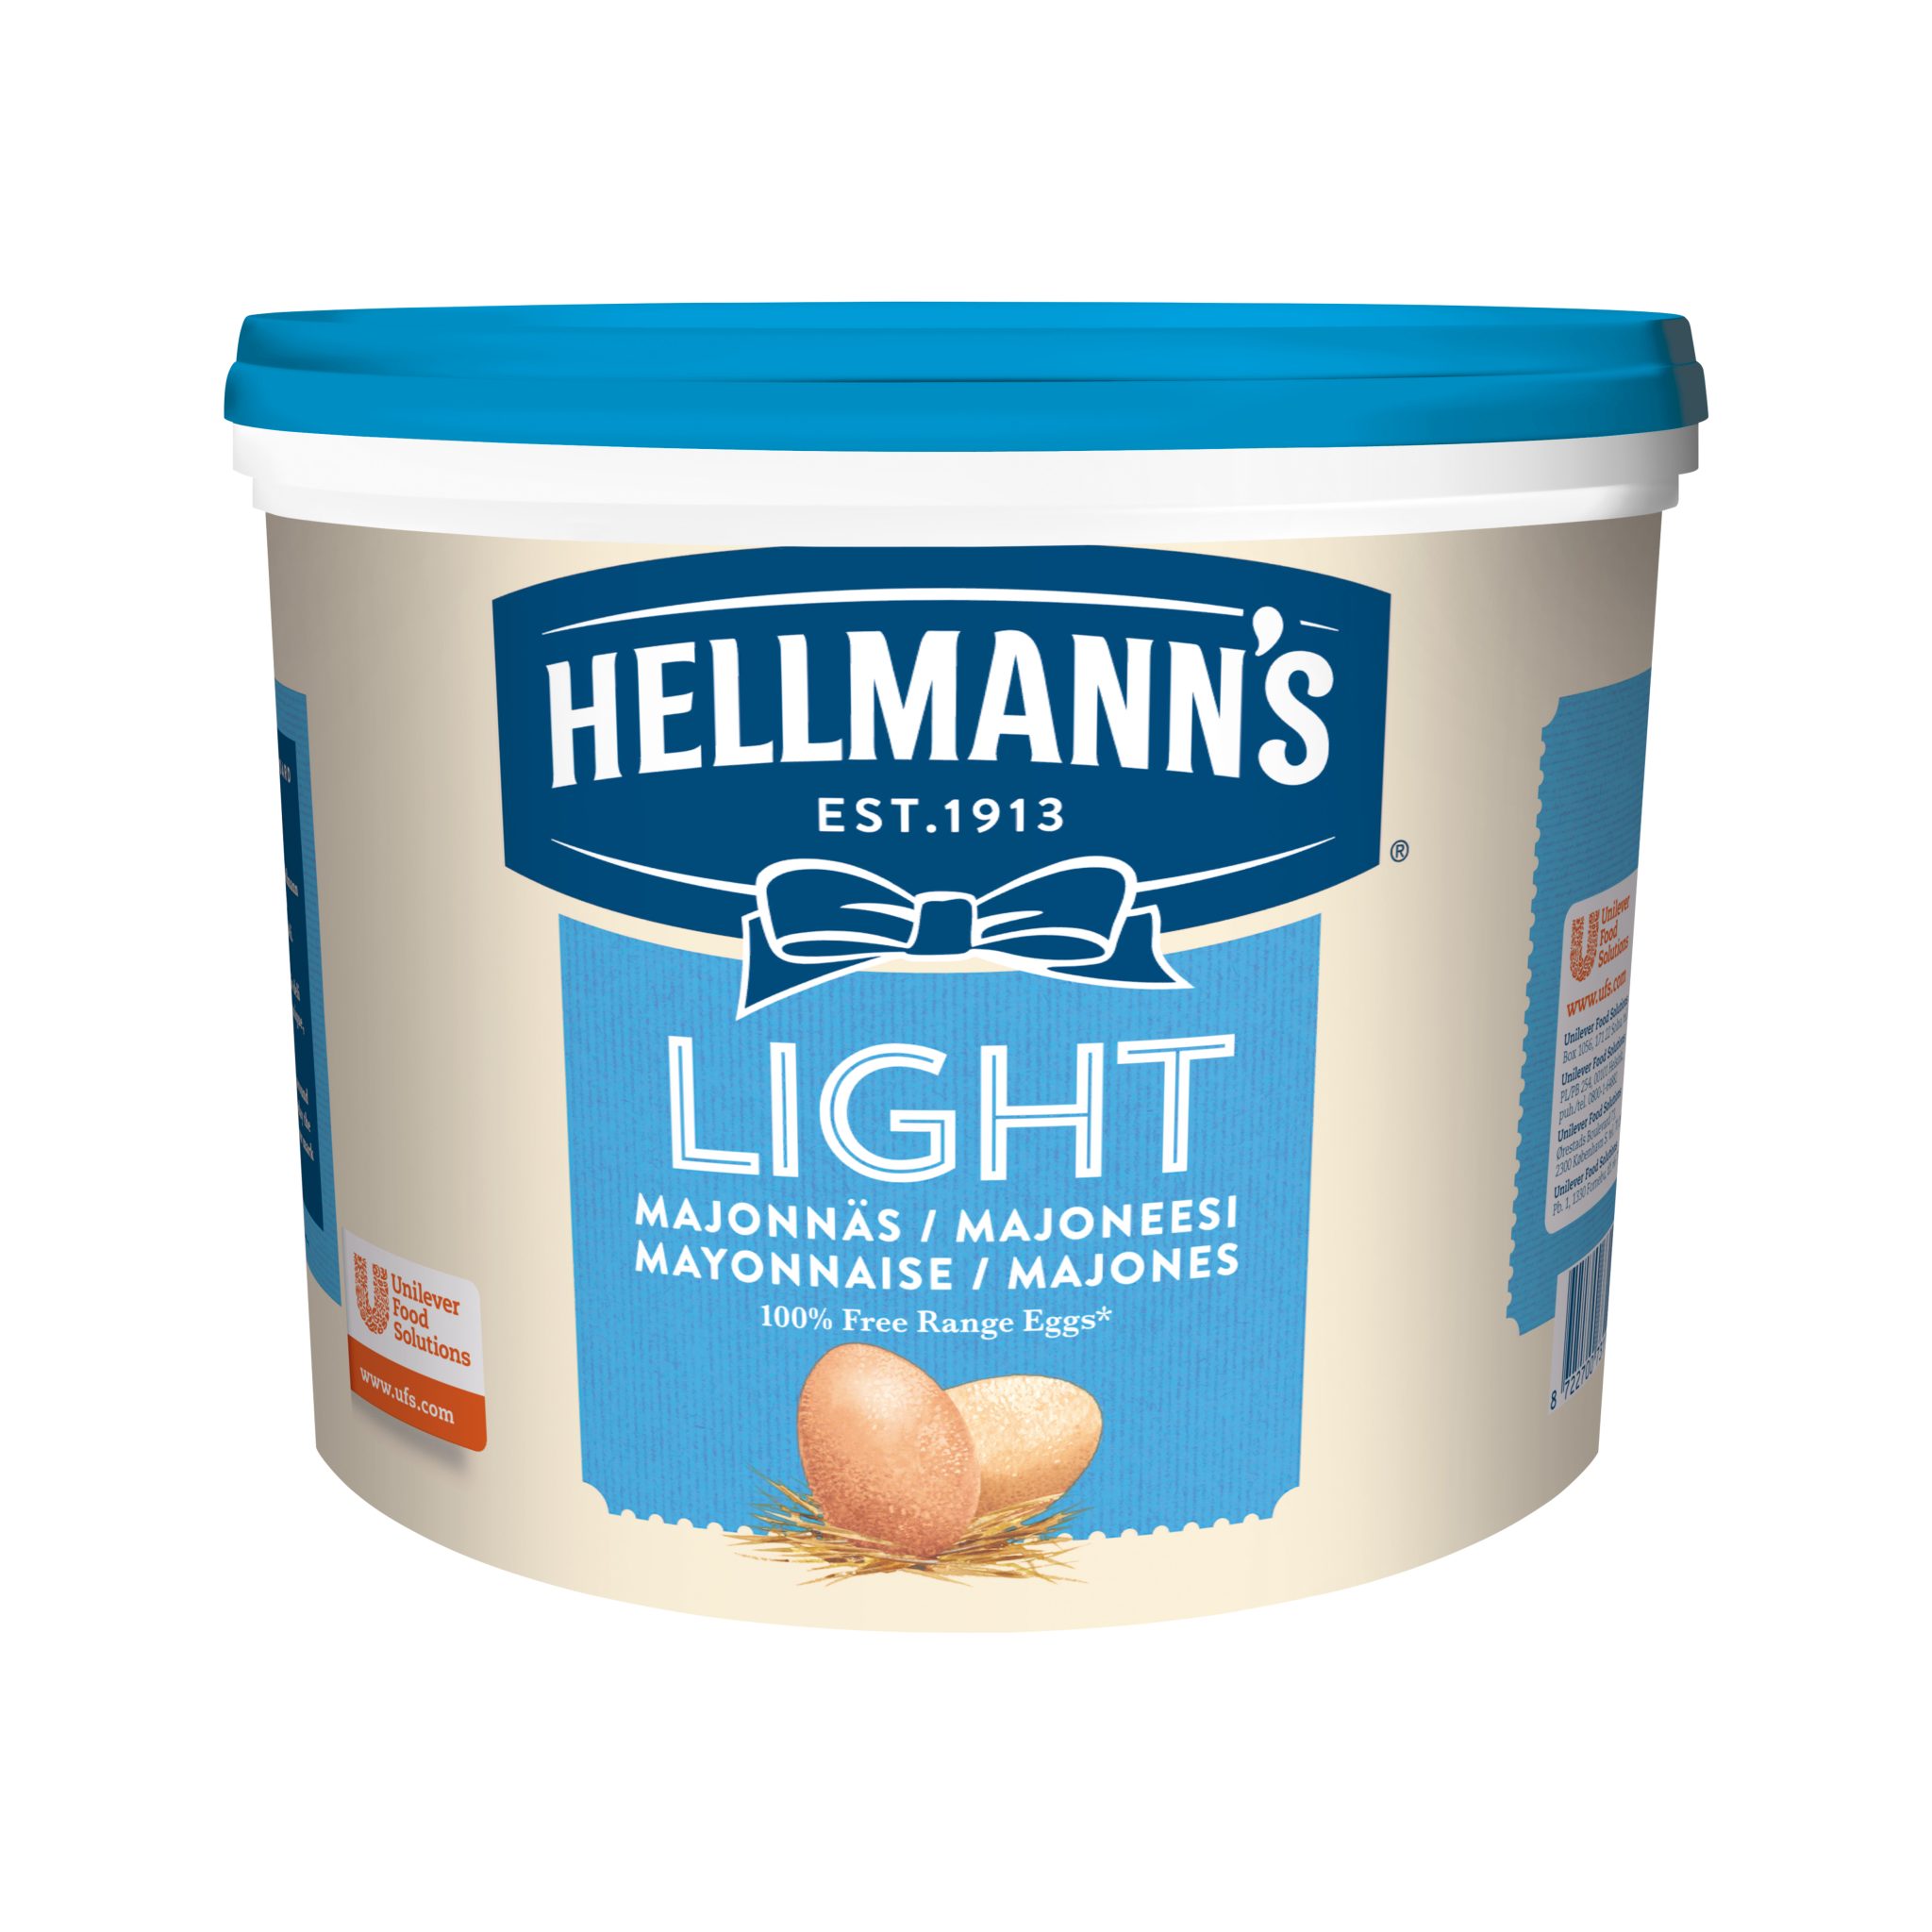 Hellmann’s Majones Light 5kg (1)